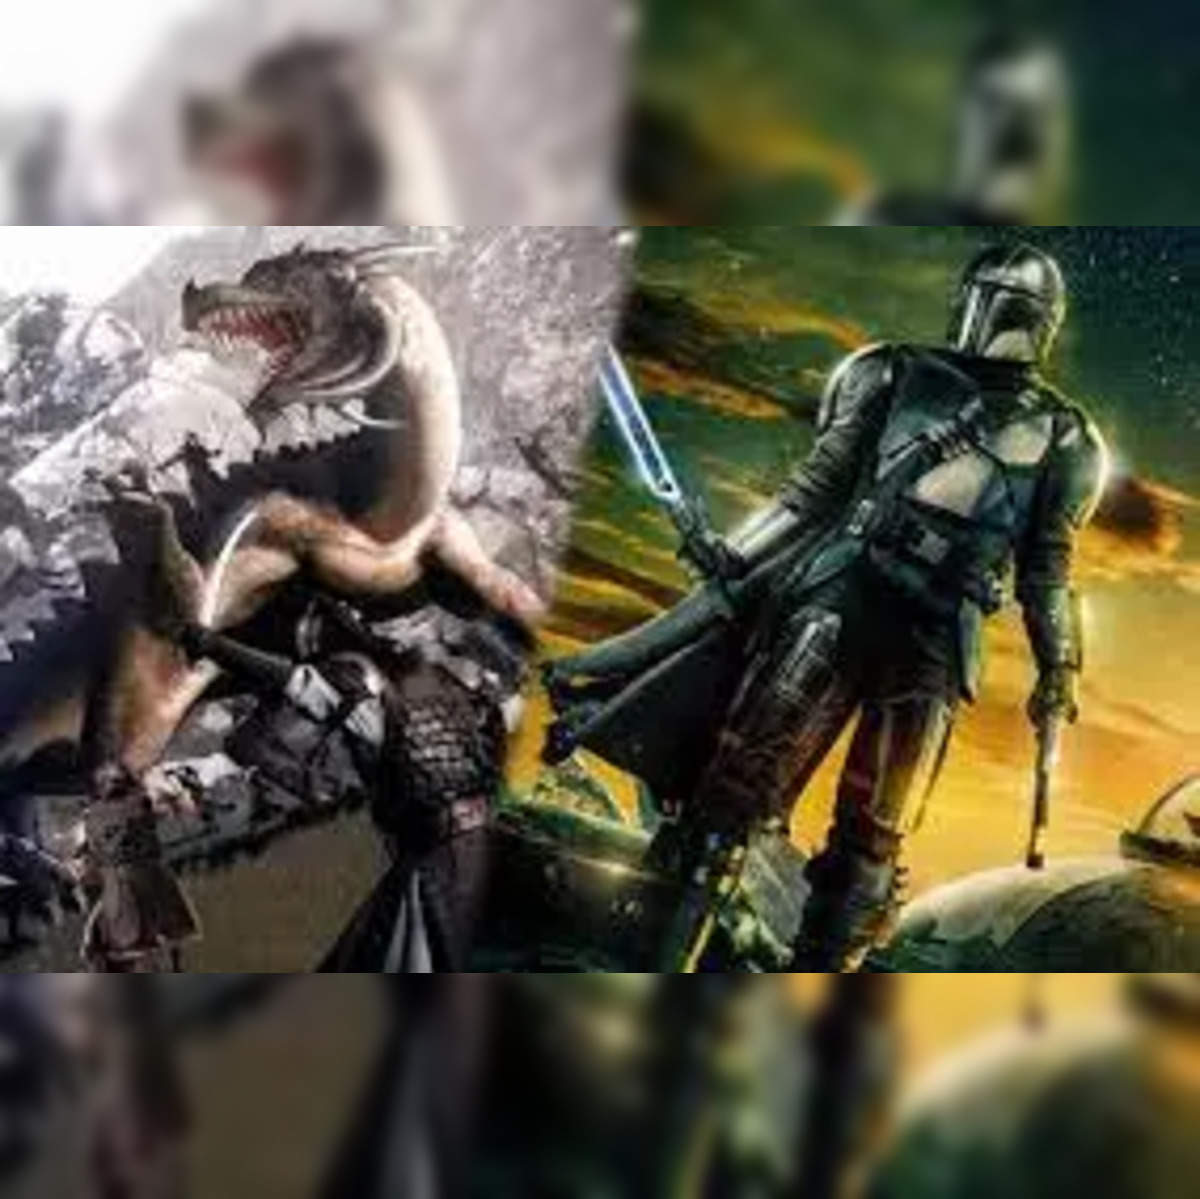 Star Wars The Mandalorian Season 3 Episode 1 Runtime Revealed